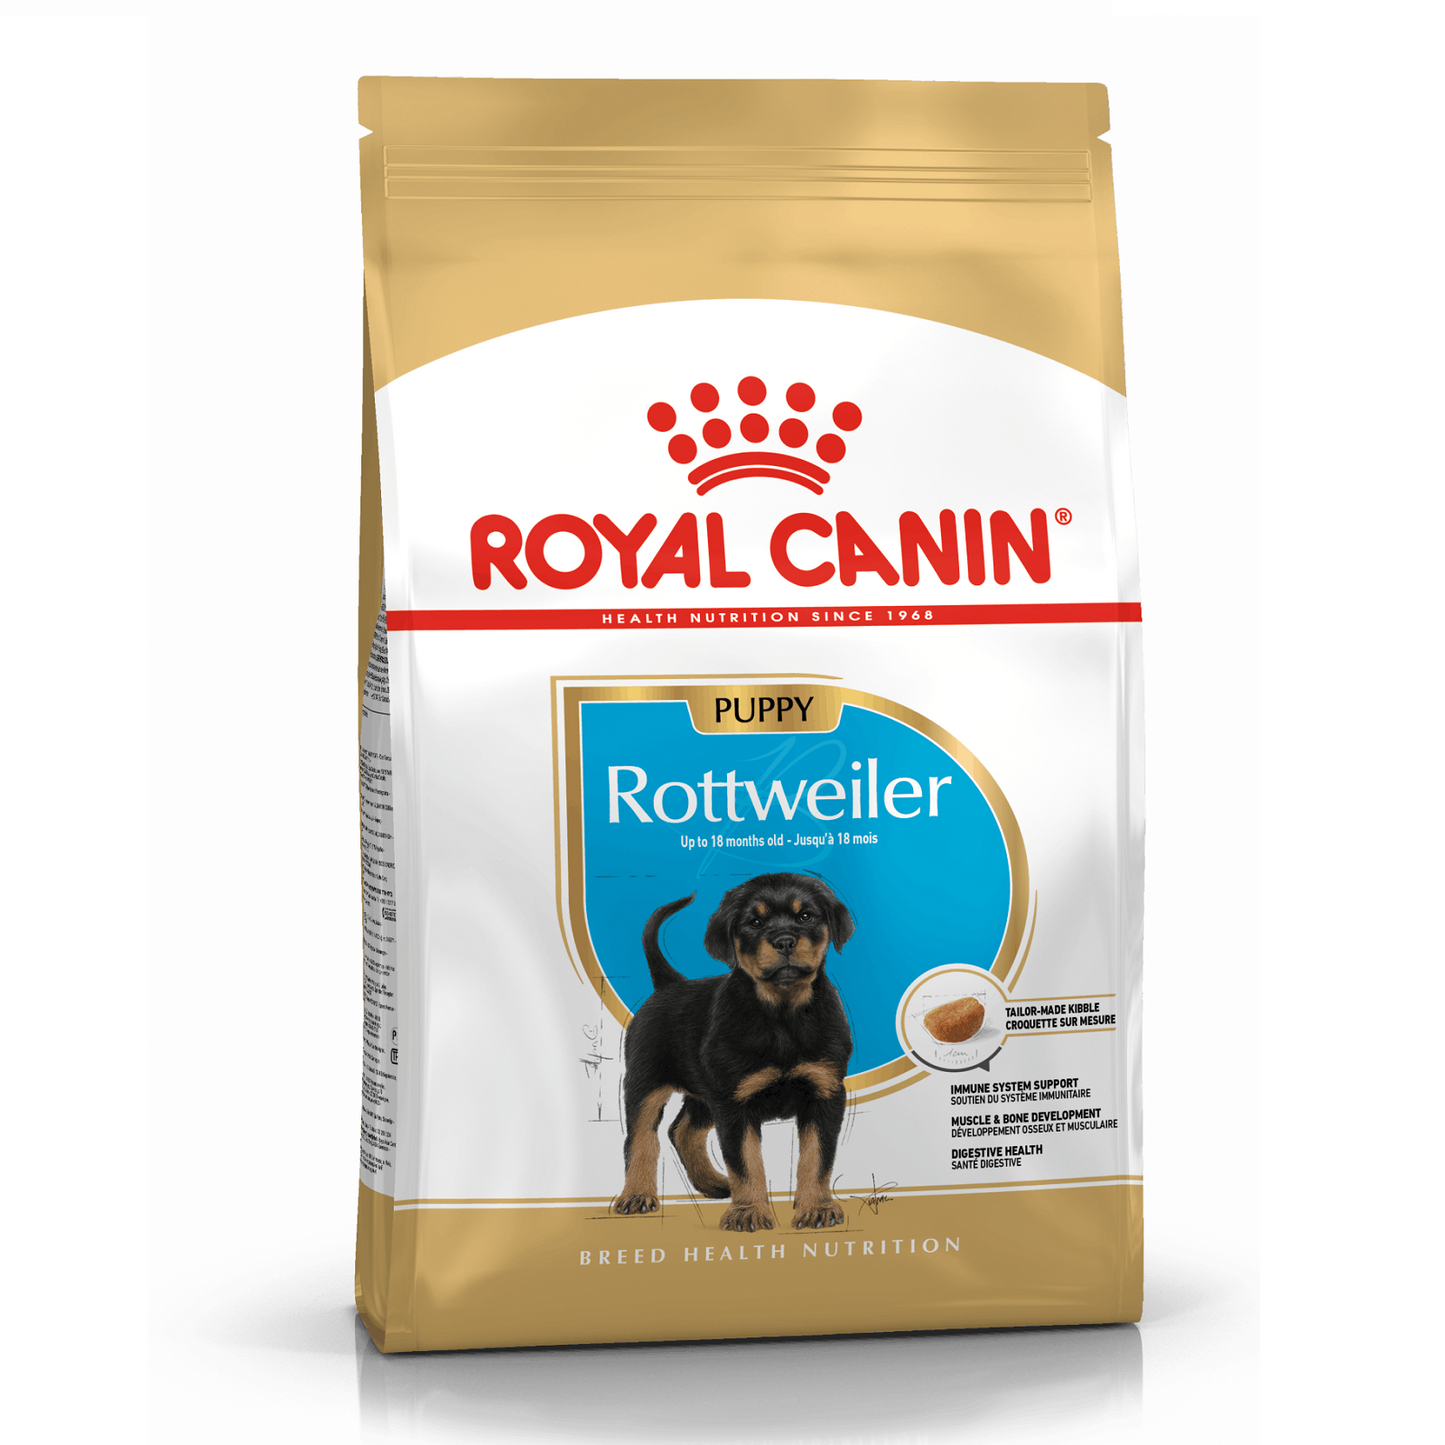 ROYAL CANIN - Rottweiler Puppy (12kg)